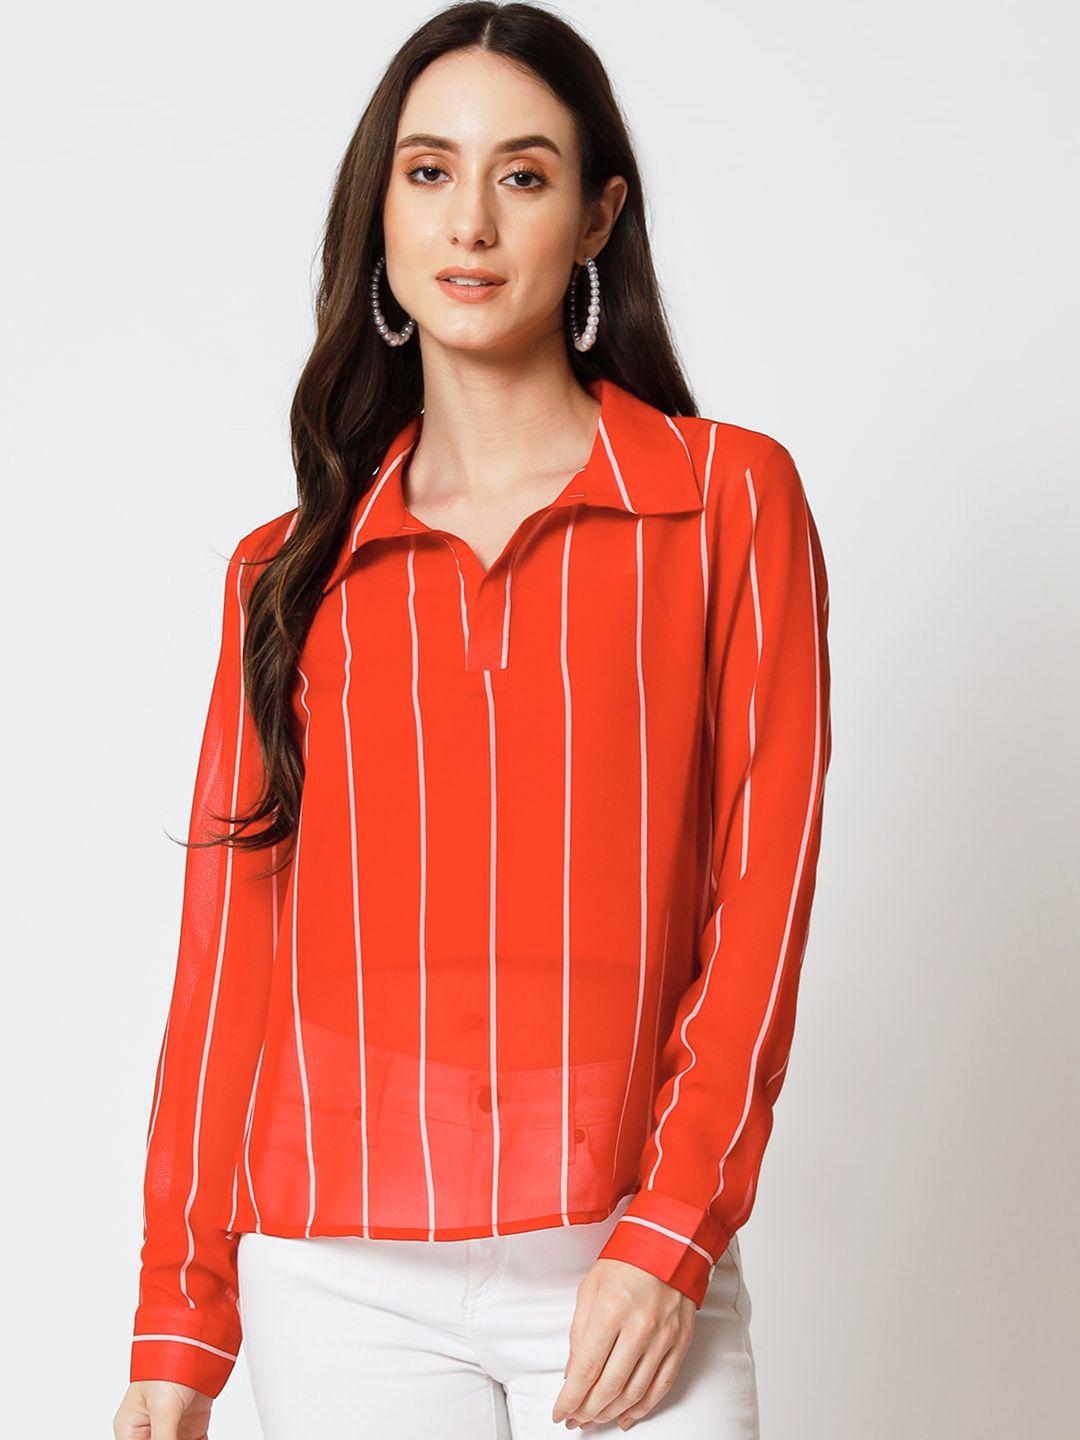 yaadleen striped shirt style top